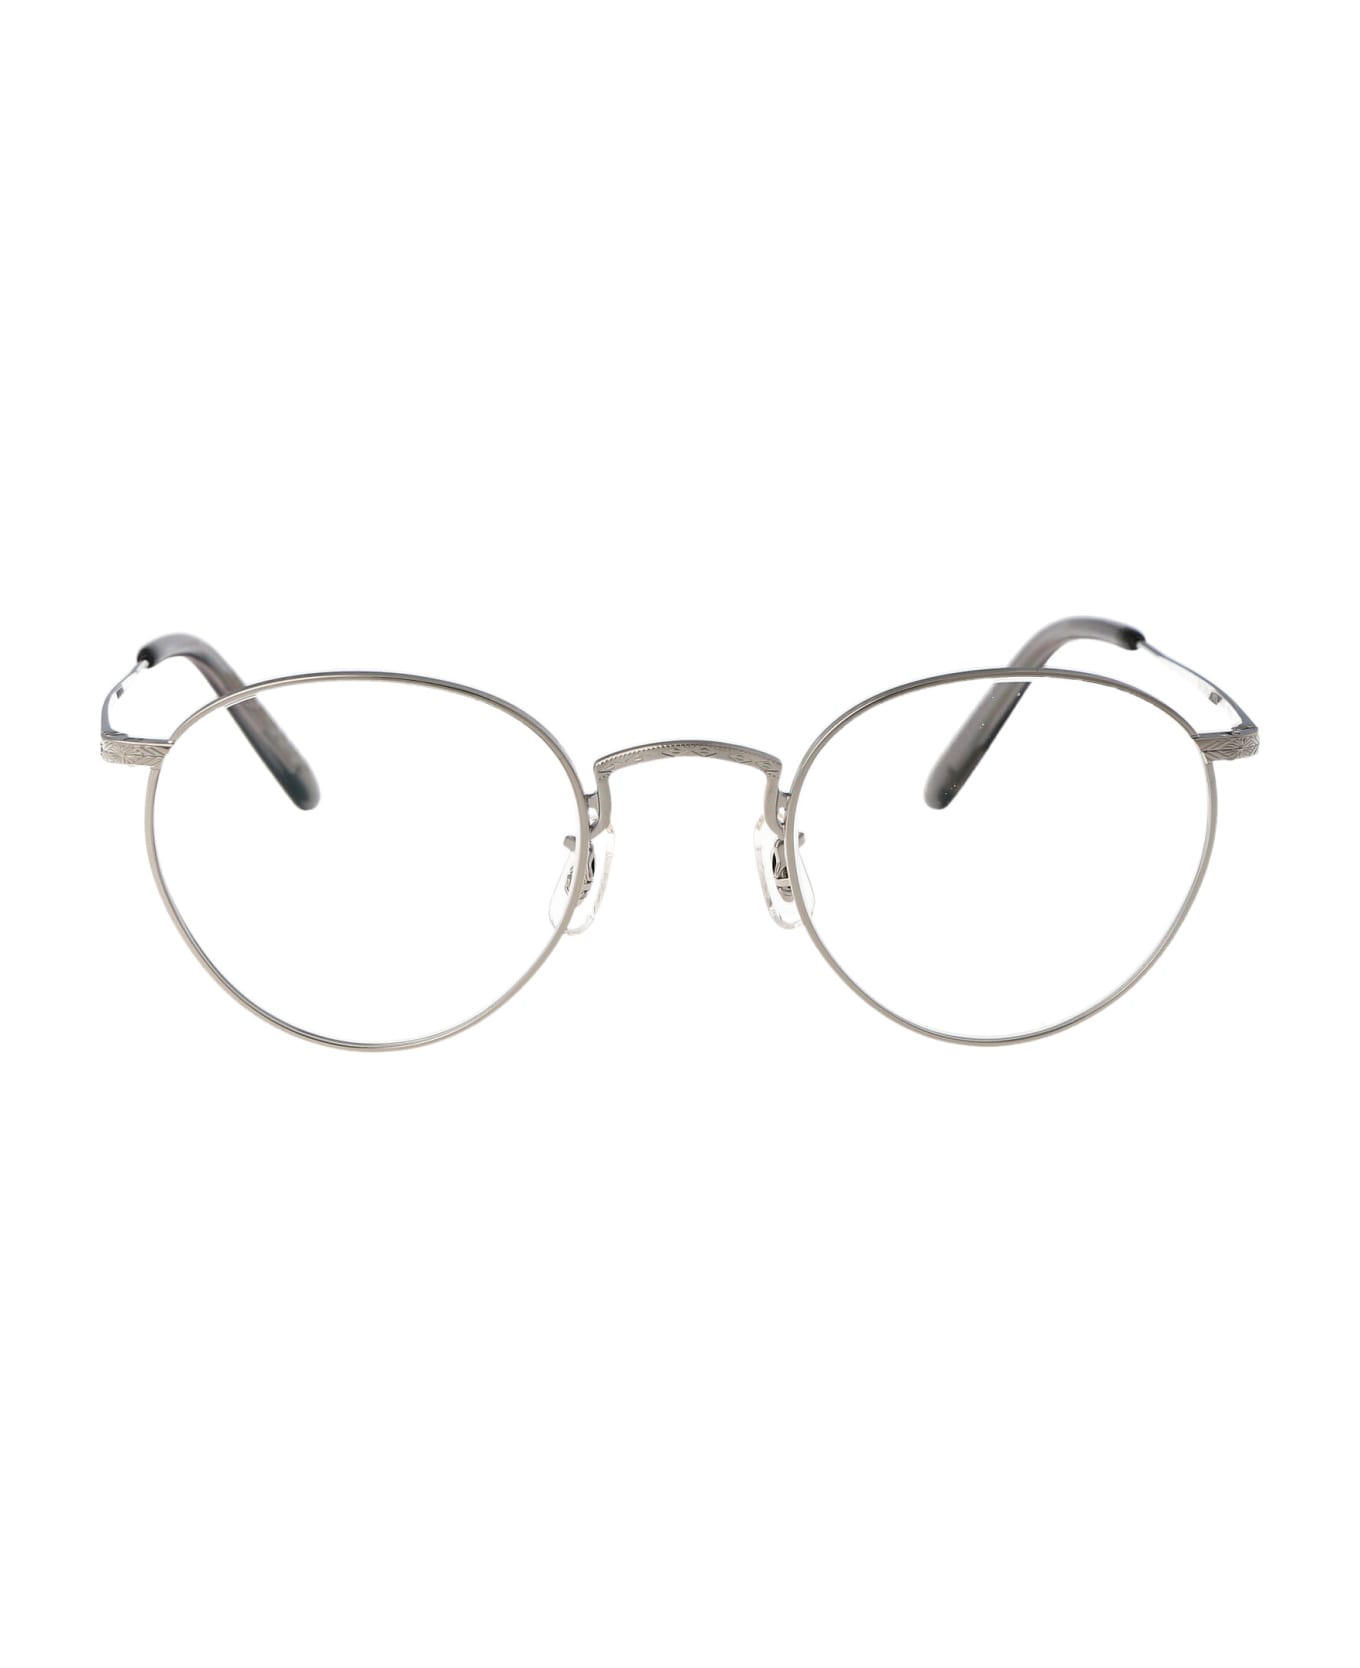 Oliver Peoples Op-47 Glasses - 5036 Silver